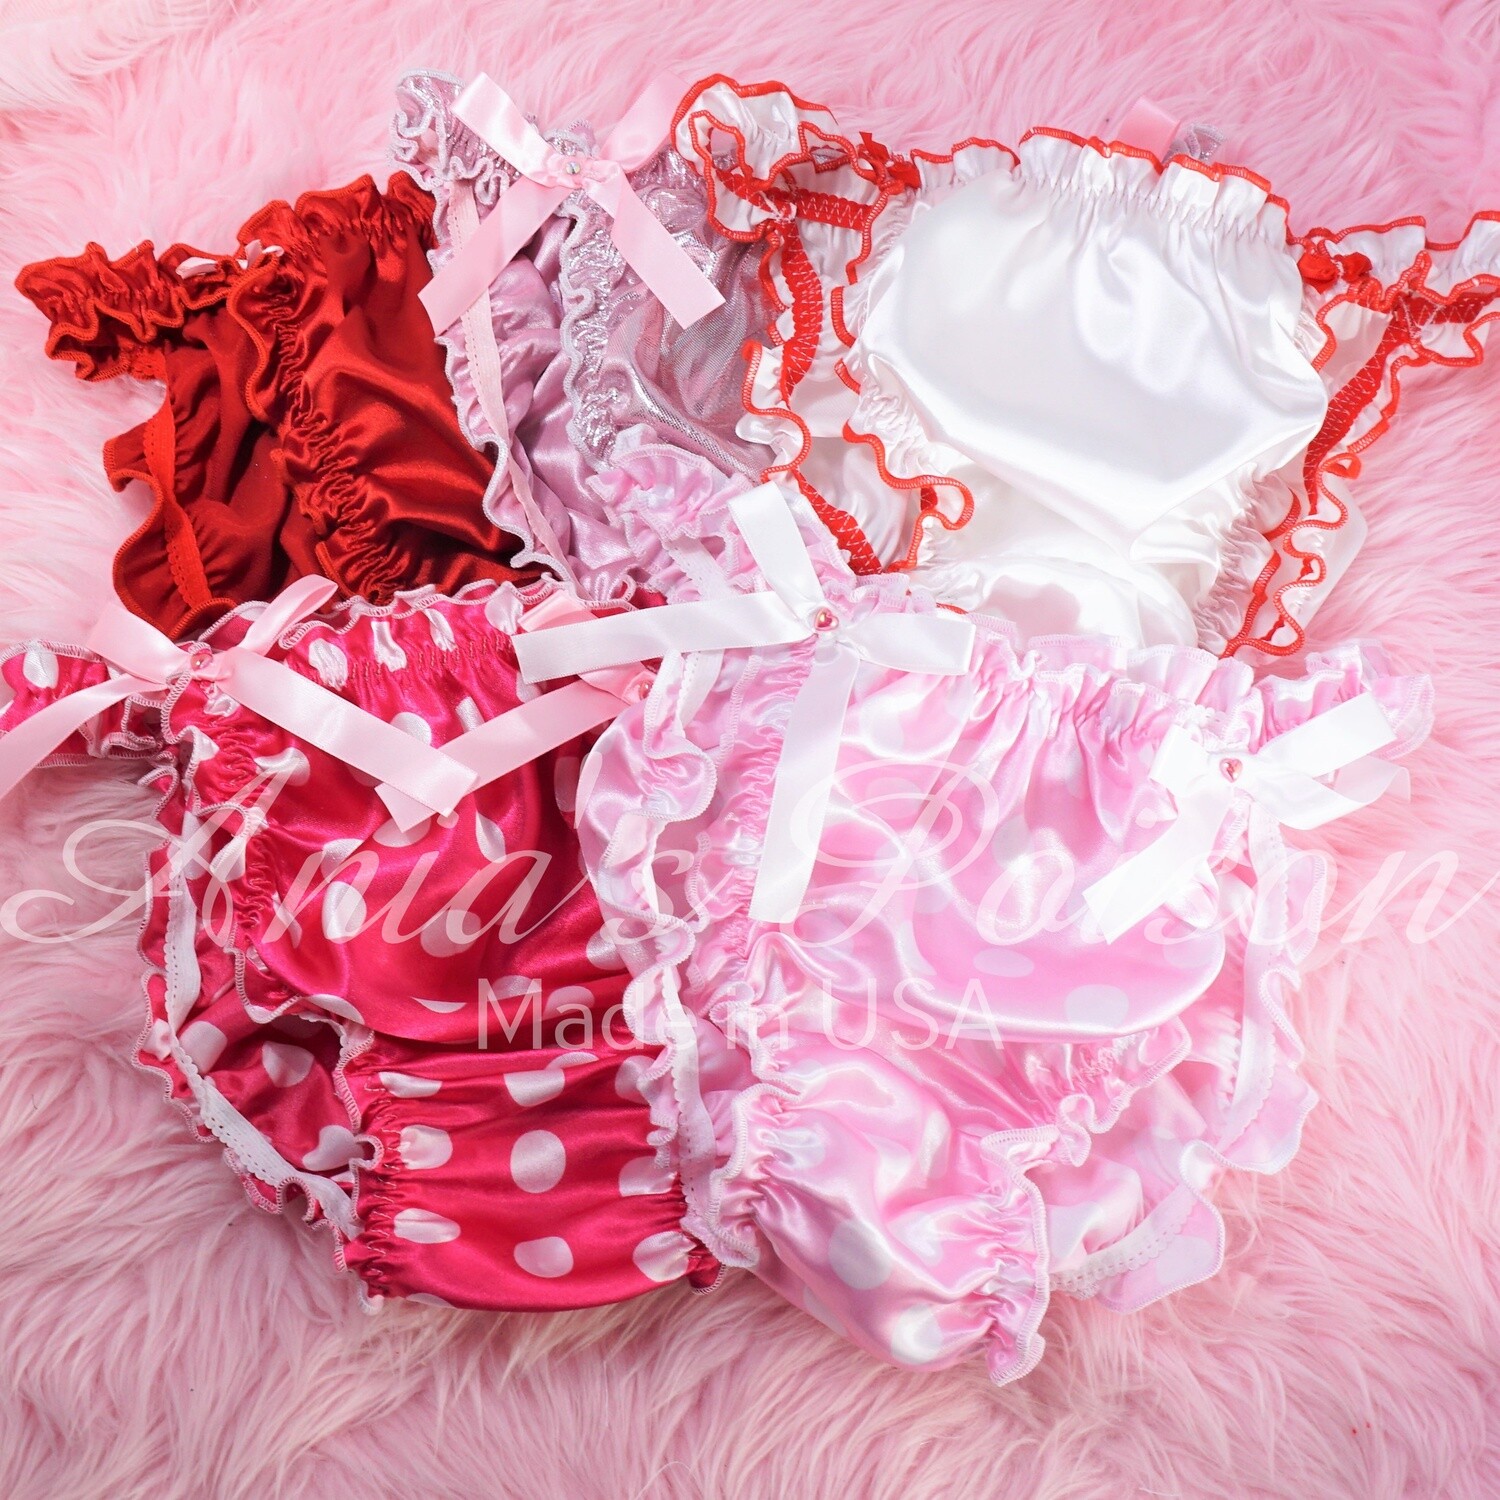 VALENTINES DAY Edition Ruffled SISSY PANTIES! Ruffled Frilly girly string bikini Satin mens panties - Oh The PINKS!